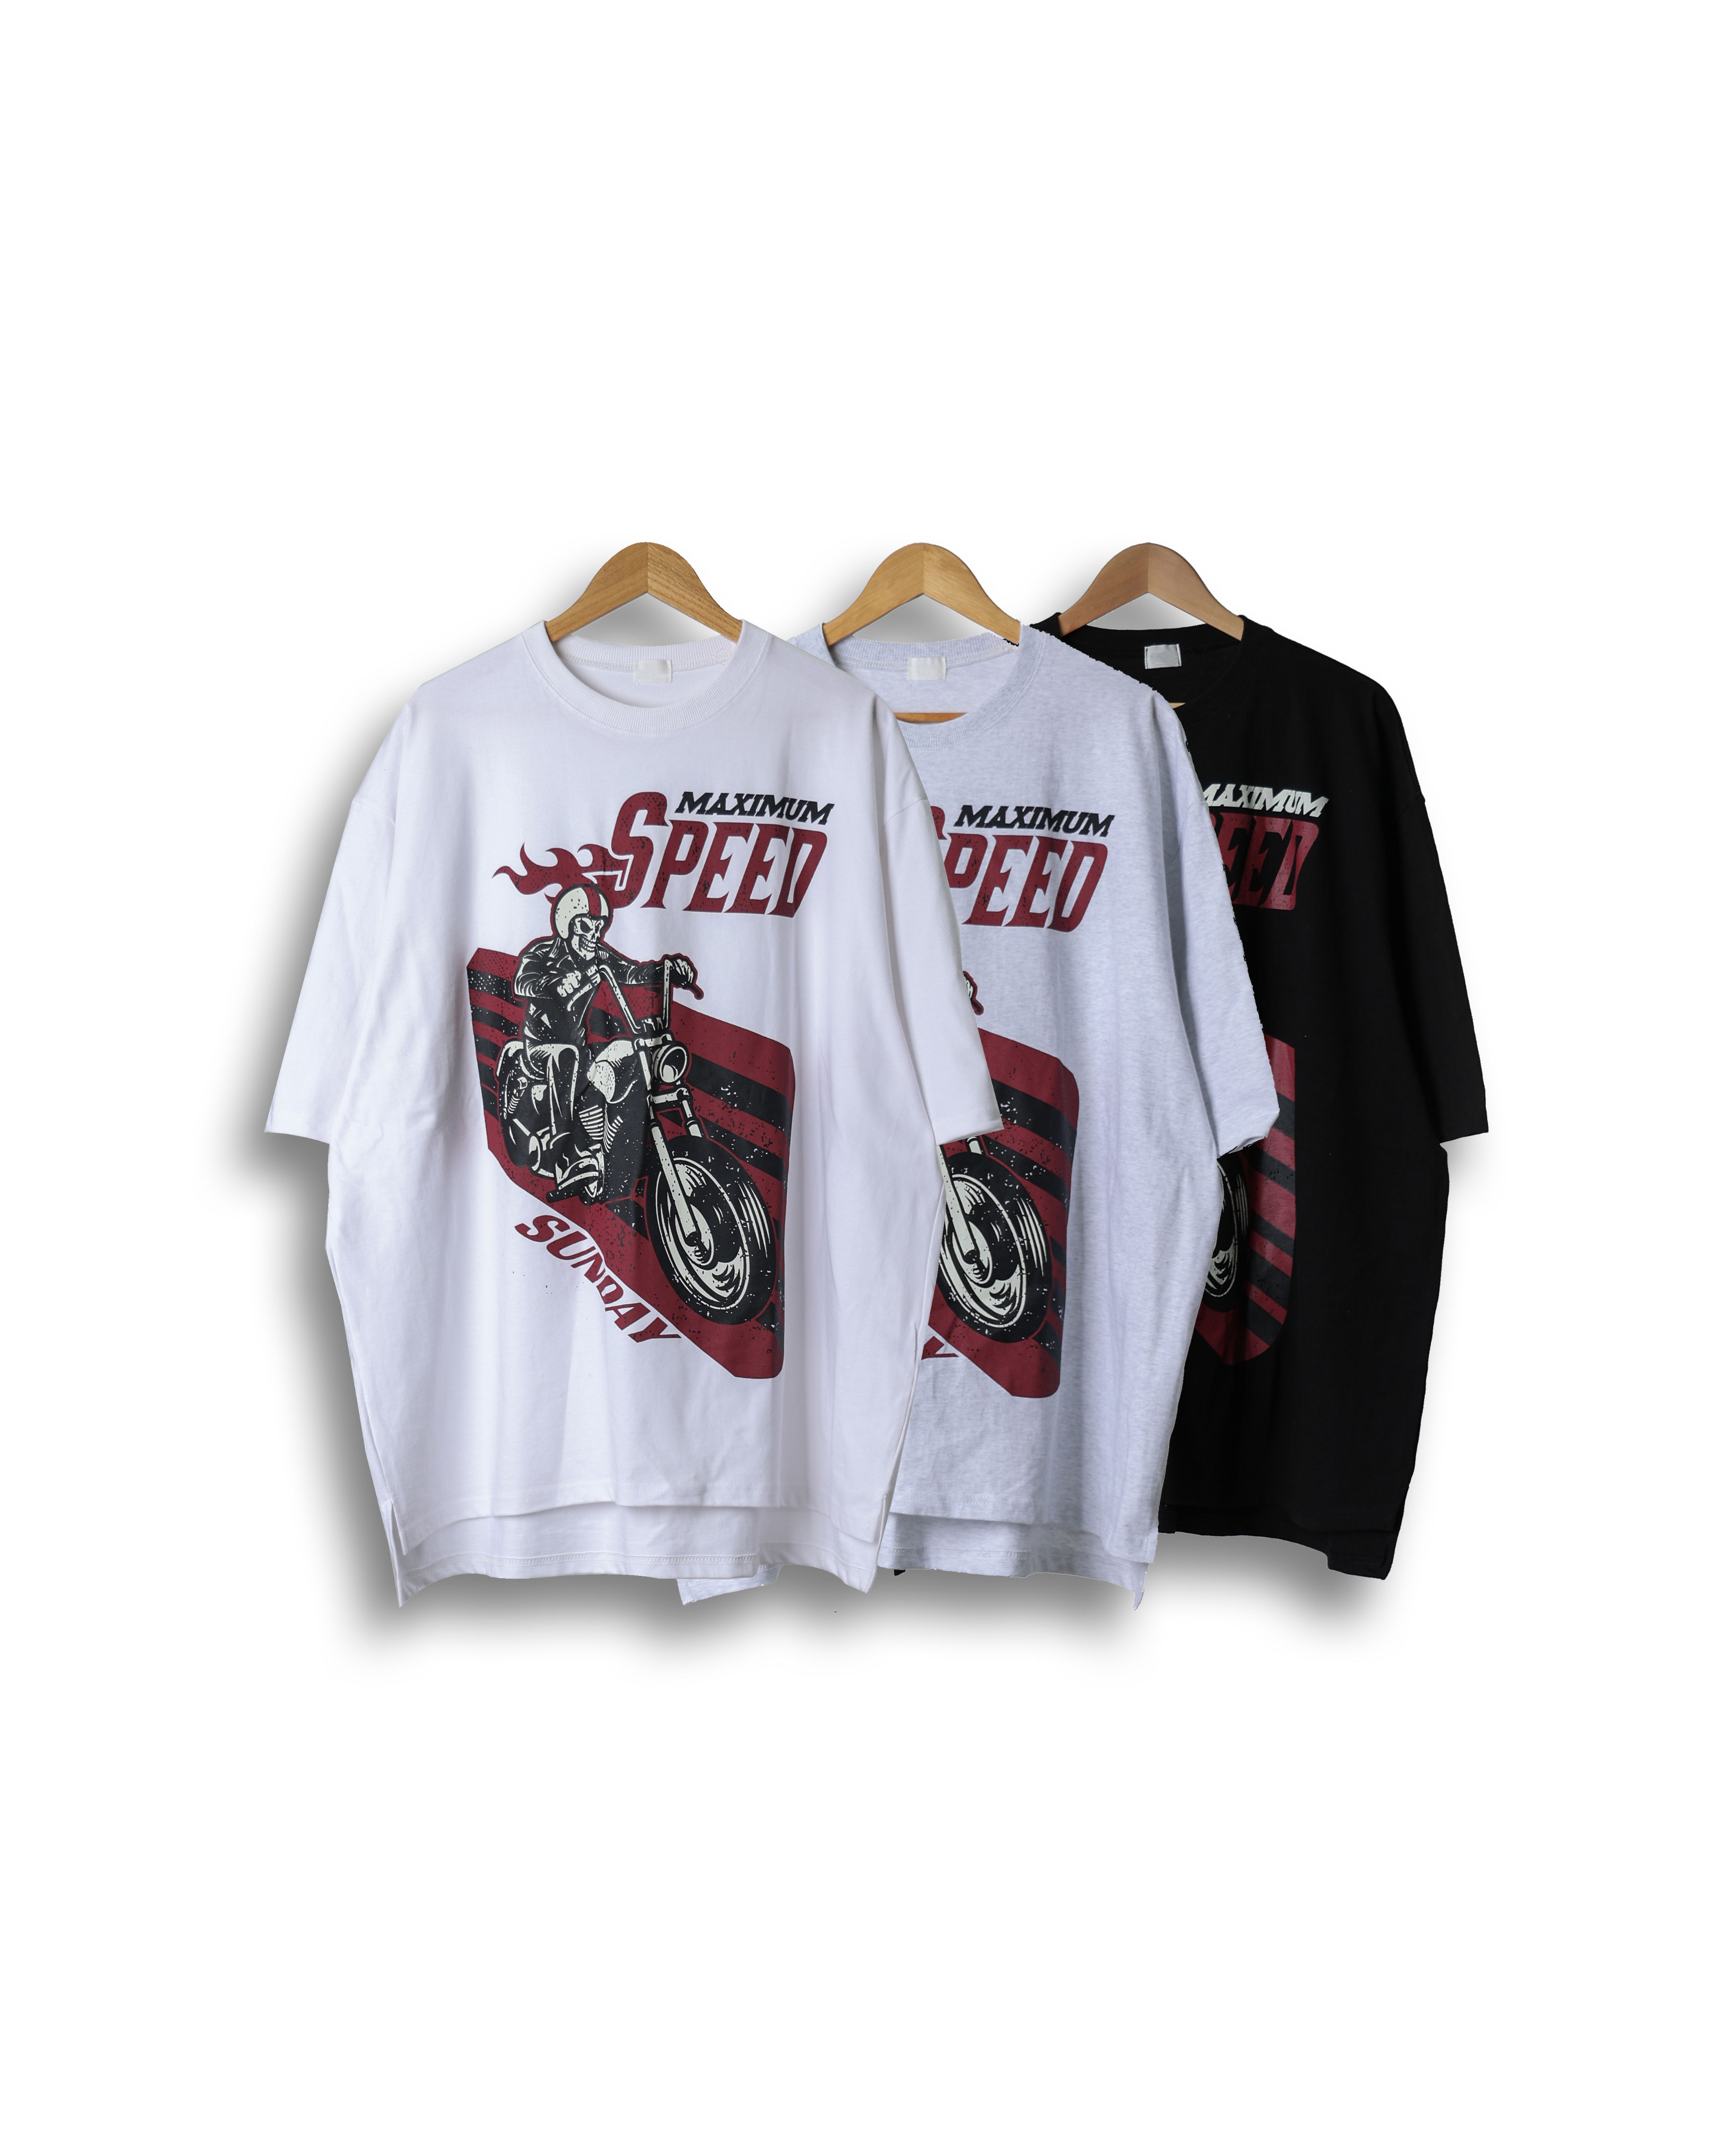 END MOTO Vintage Printed Over T Shirts (Black/Light Gray/White)